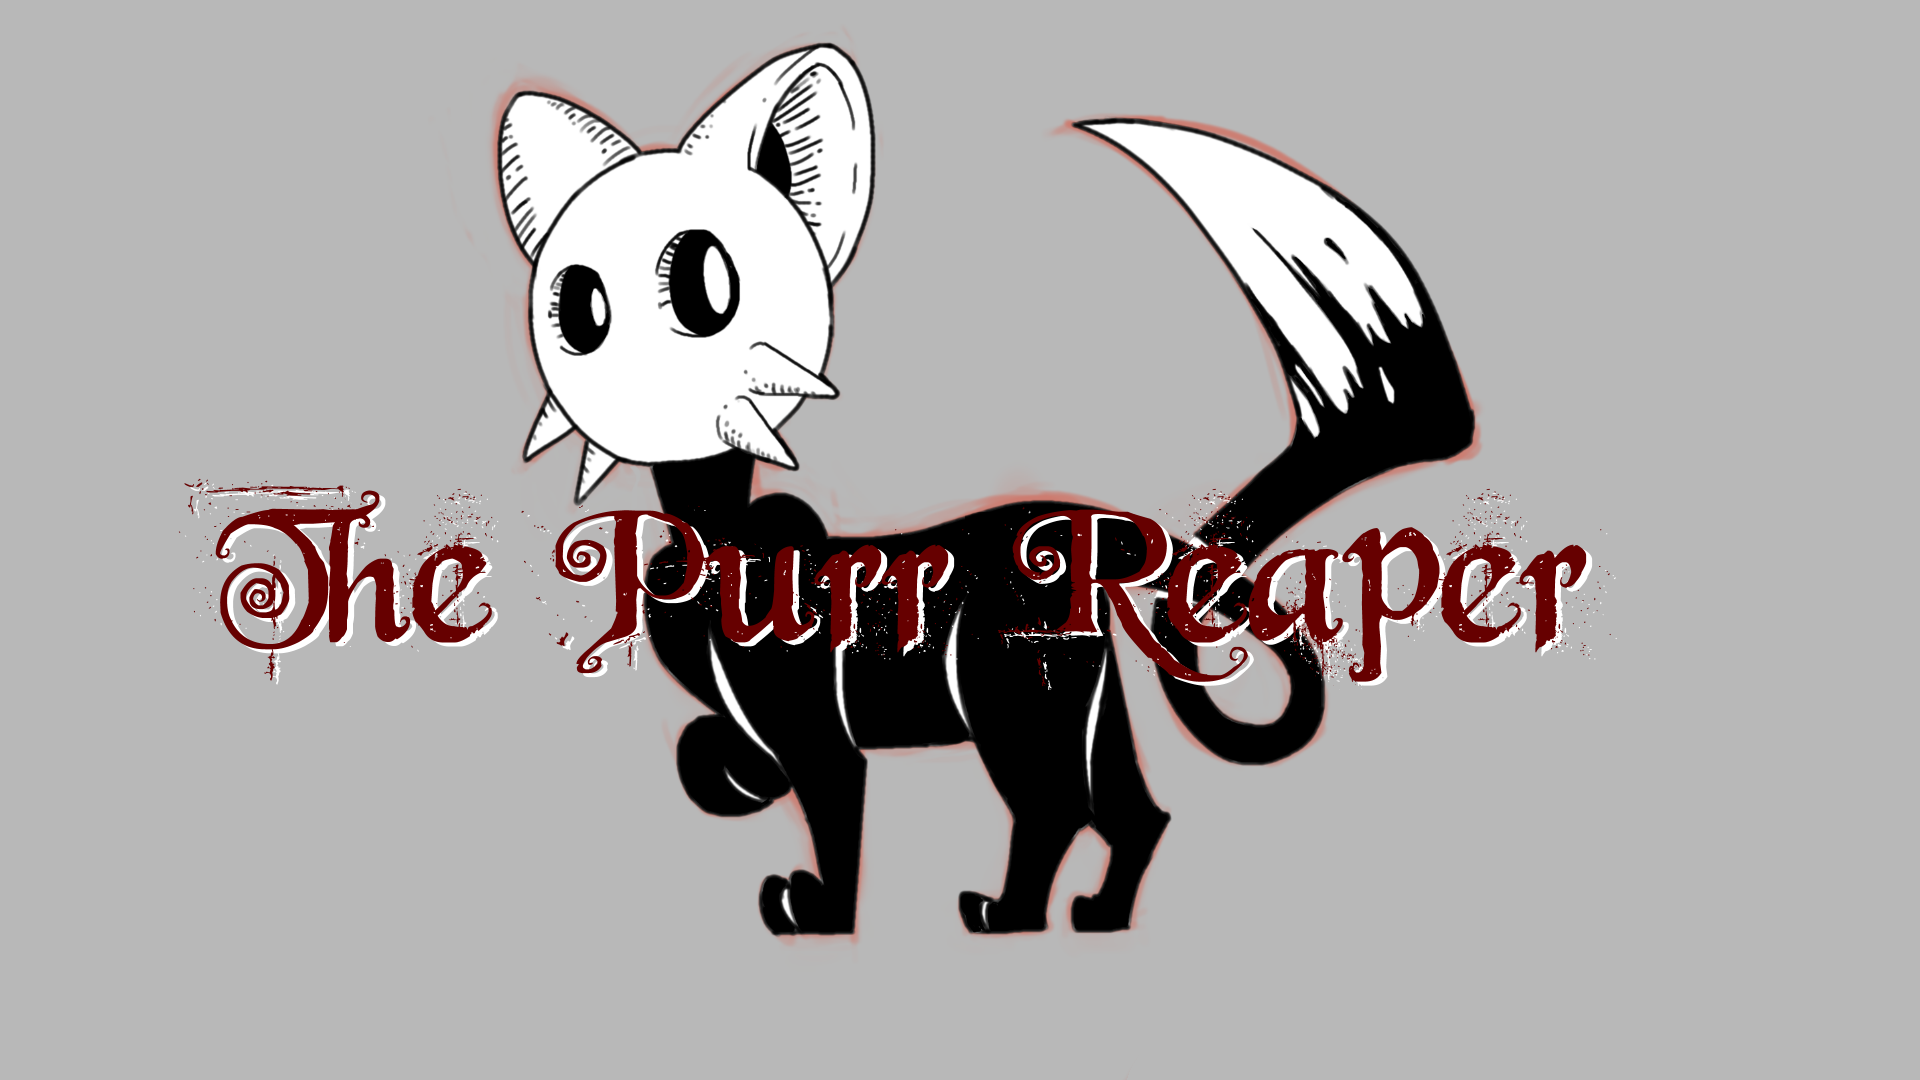 The Purr Reaper